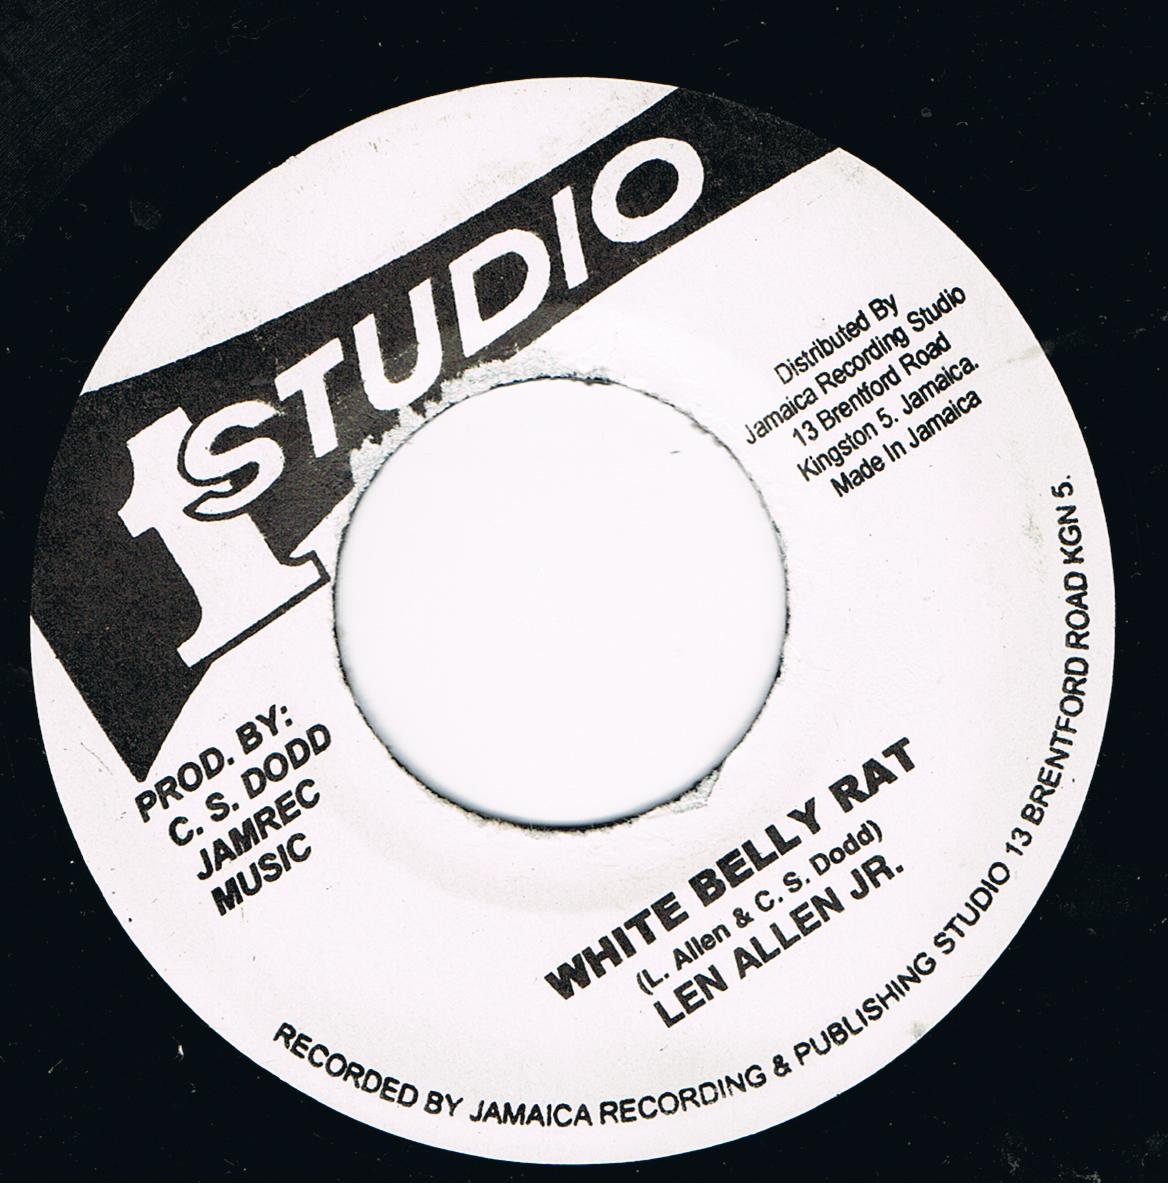 Len Allan Jr. - White Belly Rat / Len Allan Jr. & Brentford Rockers - White Belly Rat Pt.2 (Original Stamper 7")